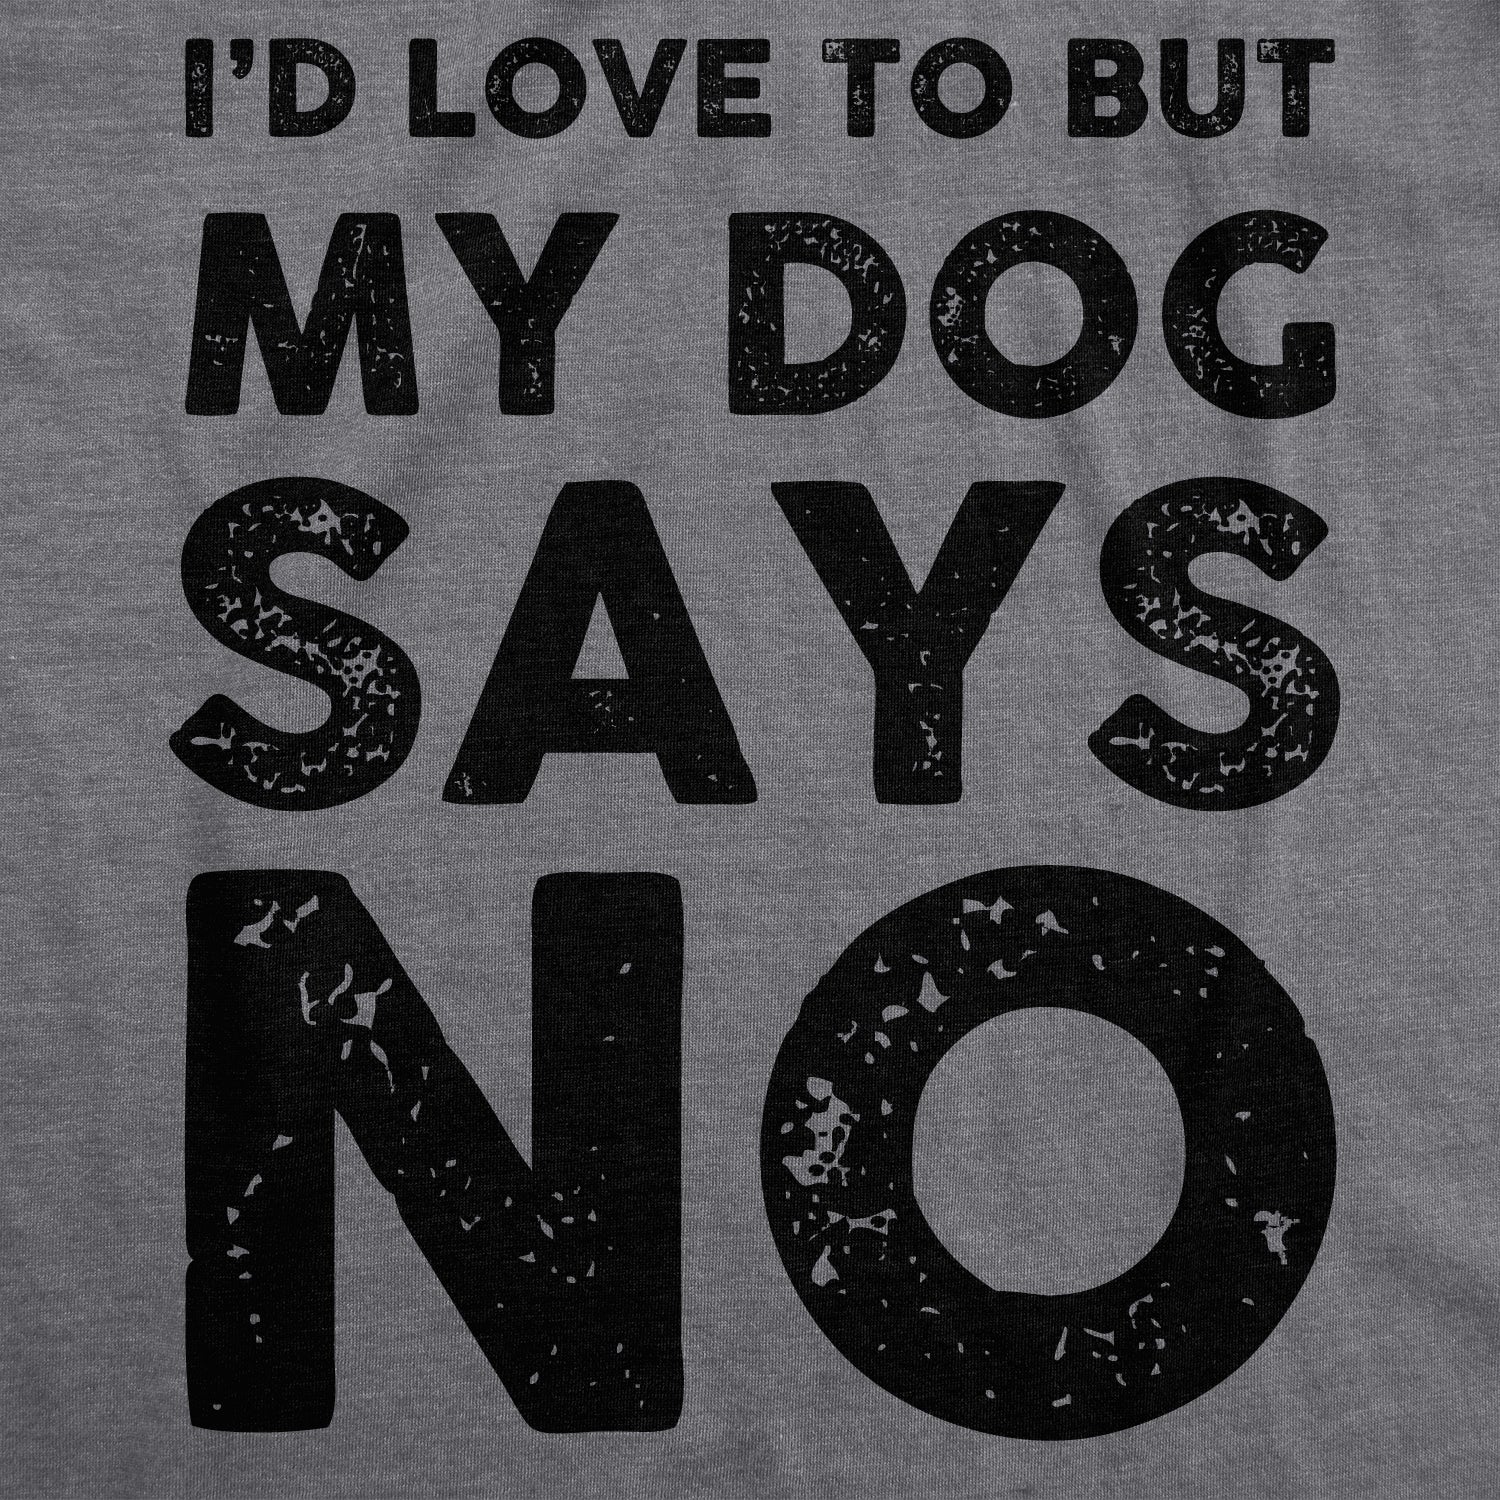 Funny Dark Heather Grey My Dog Says No Womens T Shirt Nerdy Dog introvert Tee